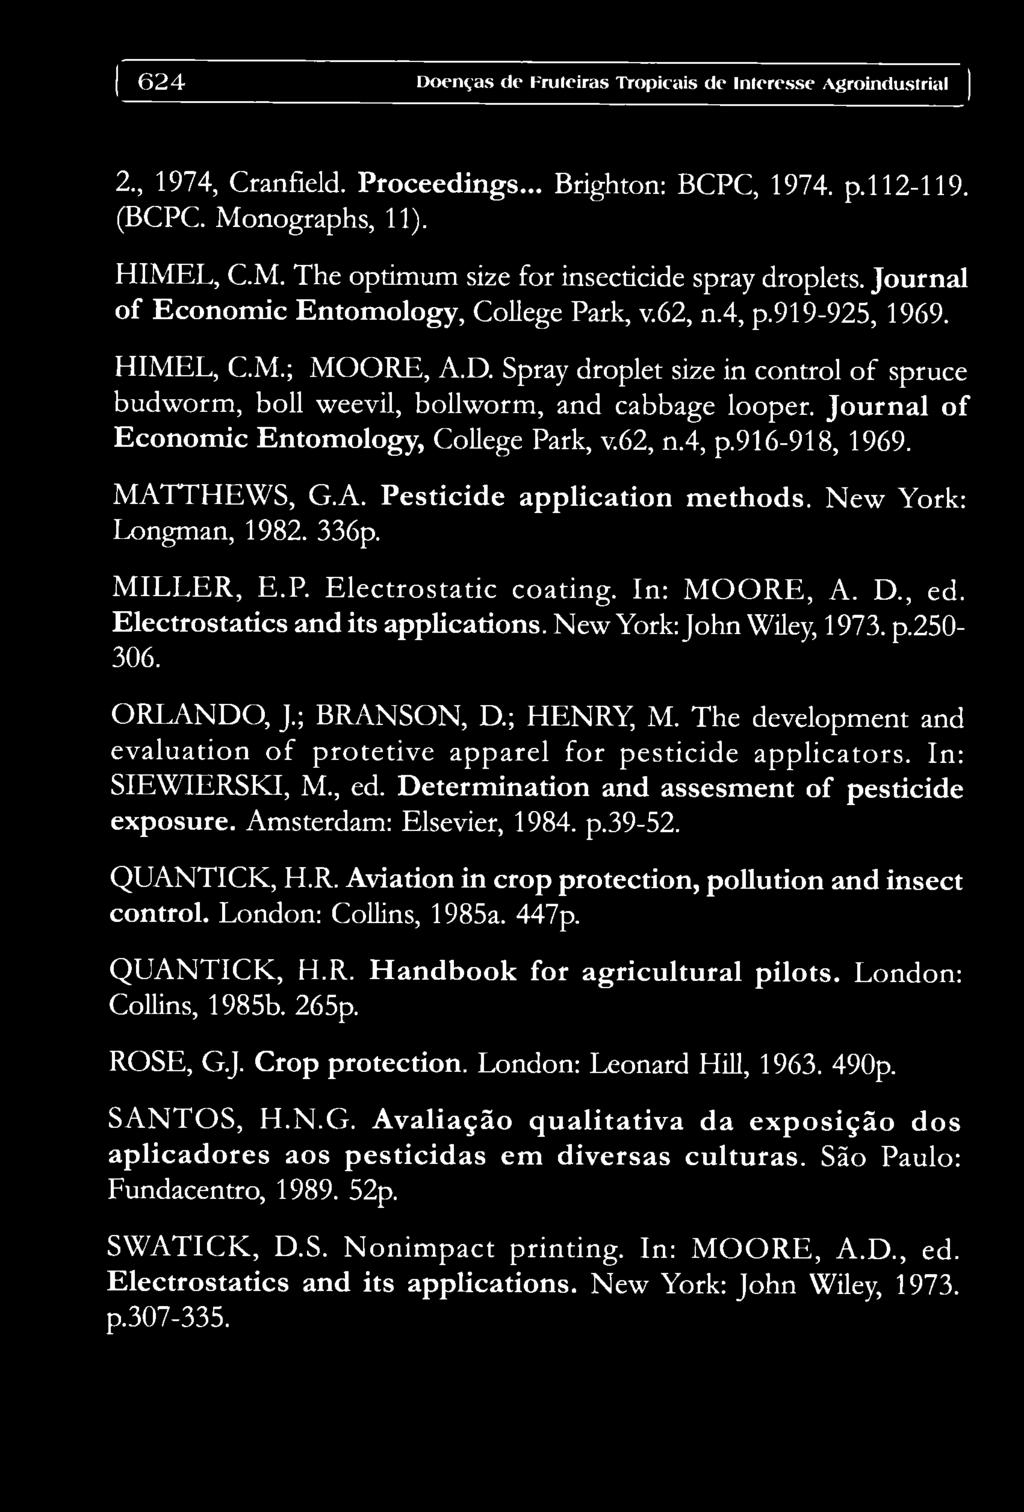 Journal of Economic Entomology, College Park, v.62, n.4, p.916-918, 1969. MATTHEWS, G.A. Pesticide application methods. New York: Longman, 1982. 336p. MILLER, E.P Electrostatic coating. In: MOORE, A.